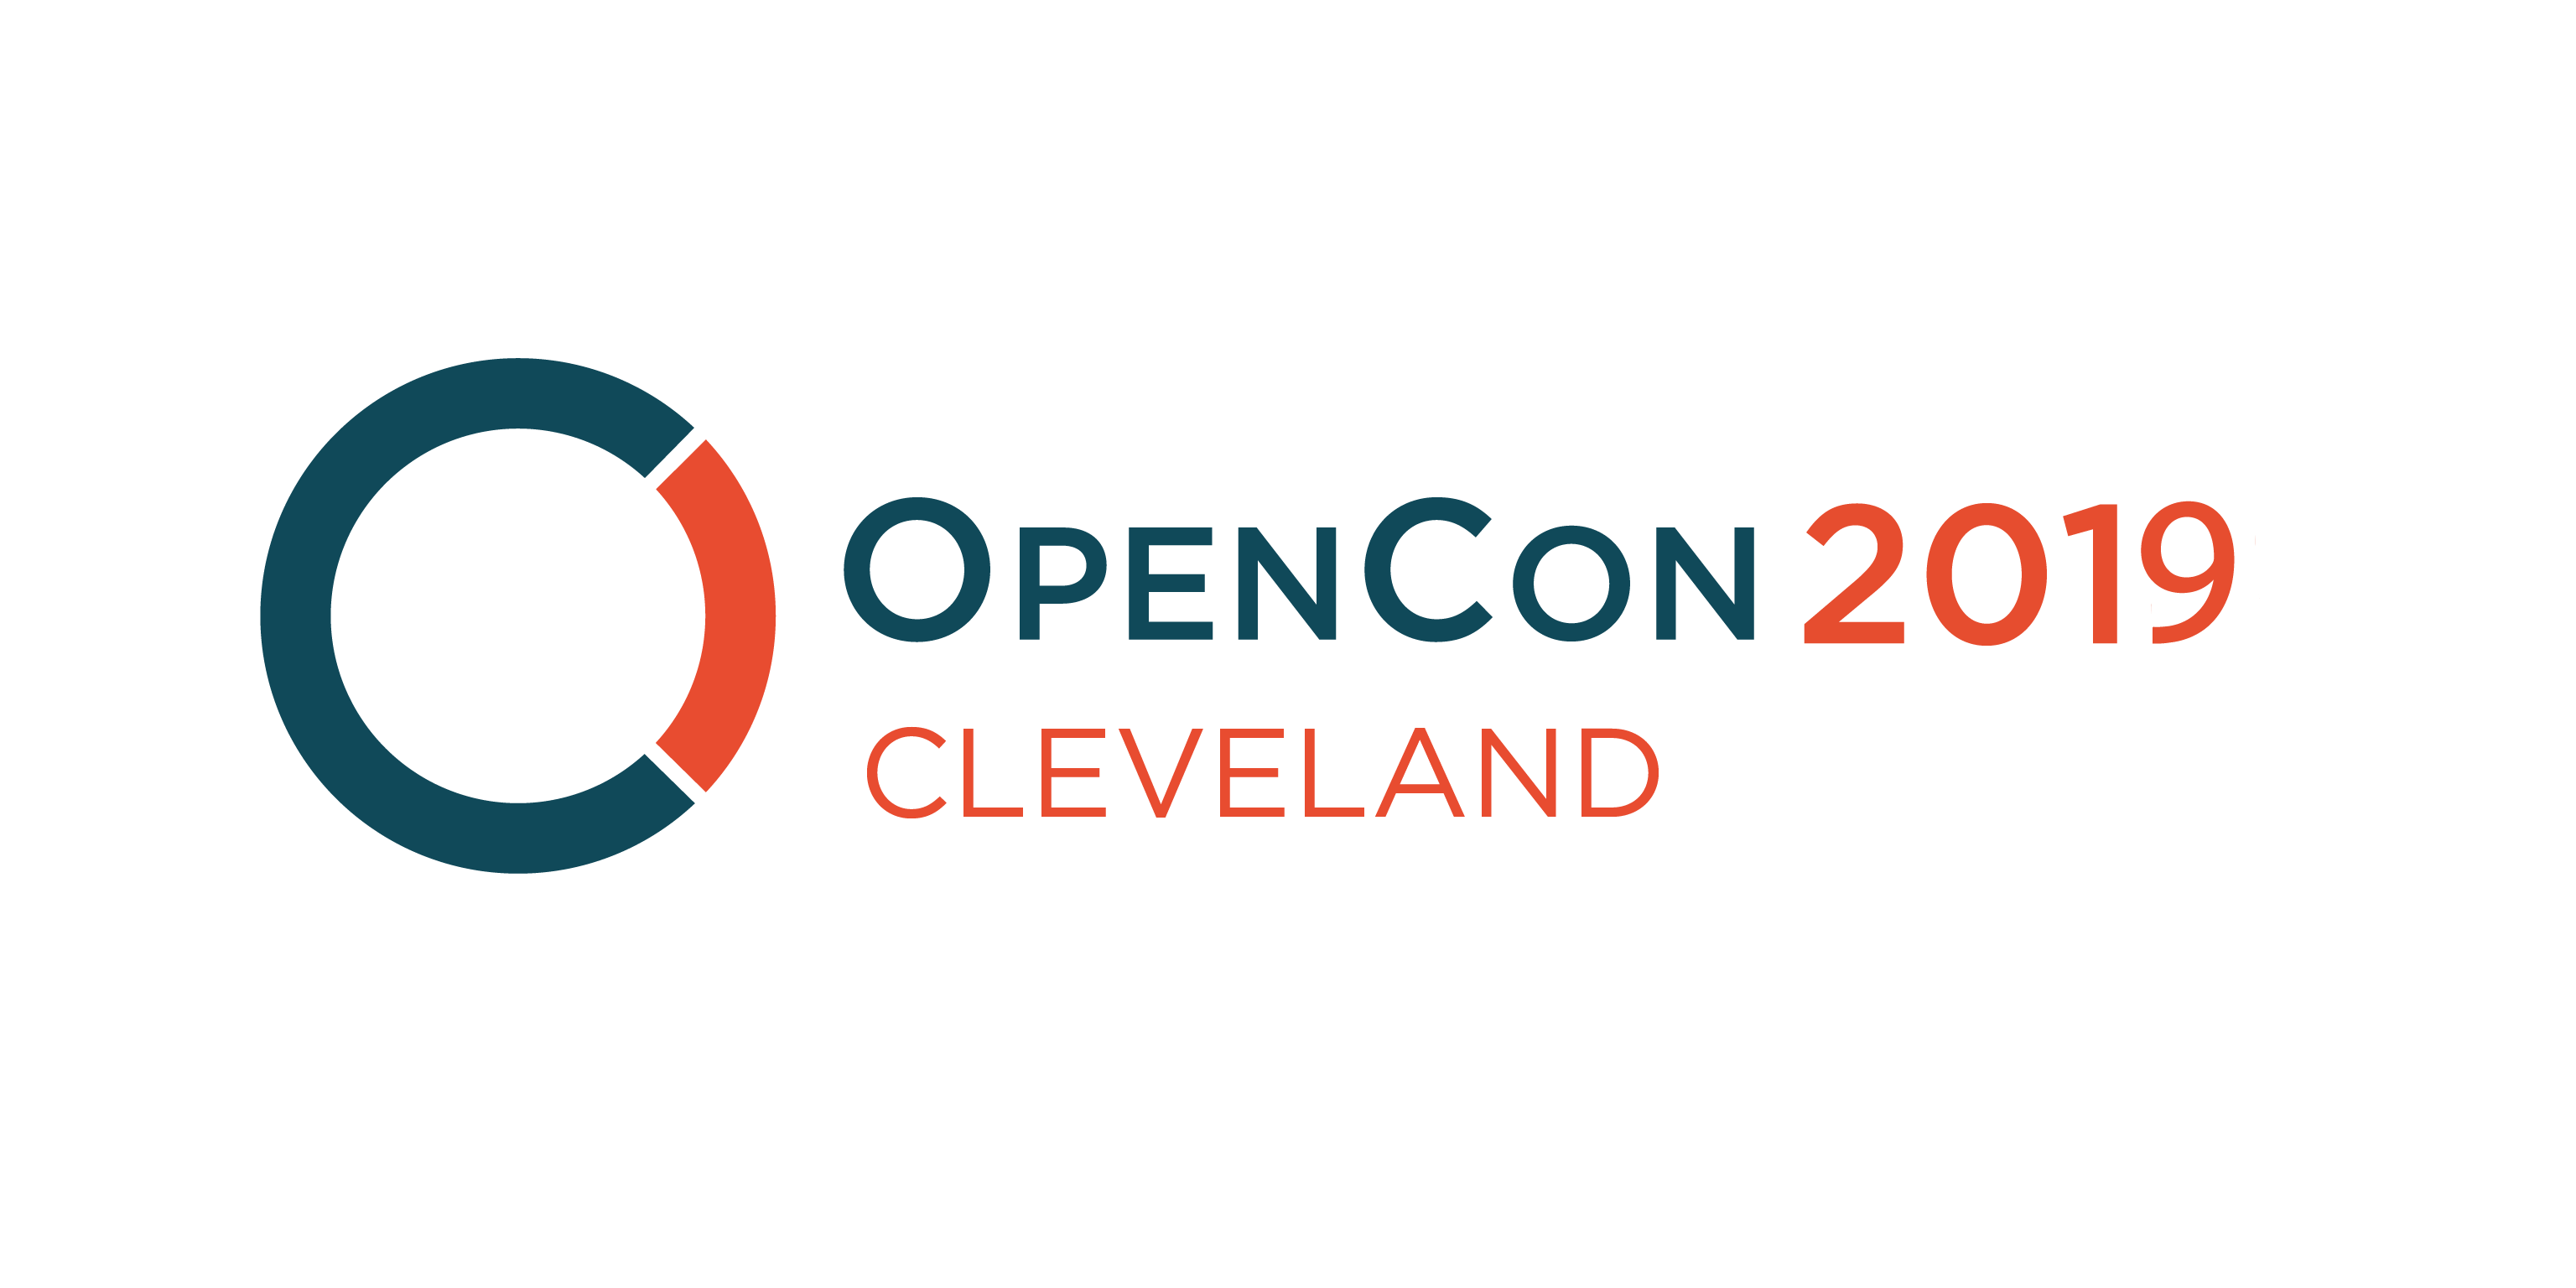 OpenCon 2019 Cleveland